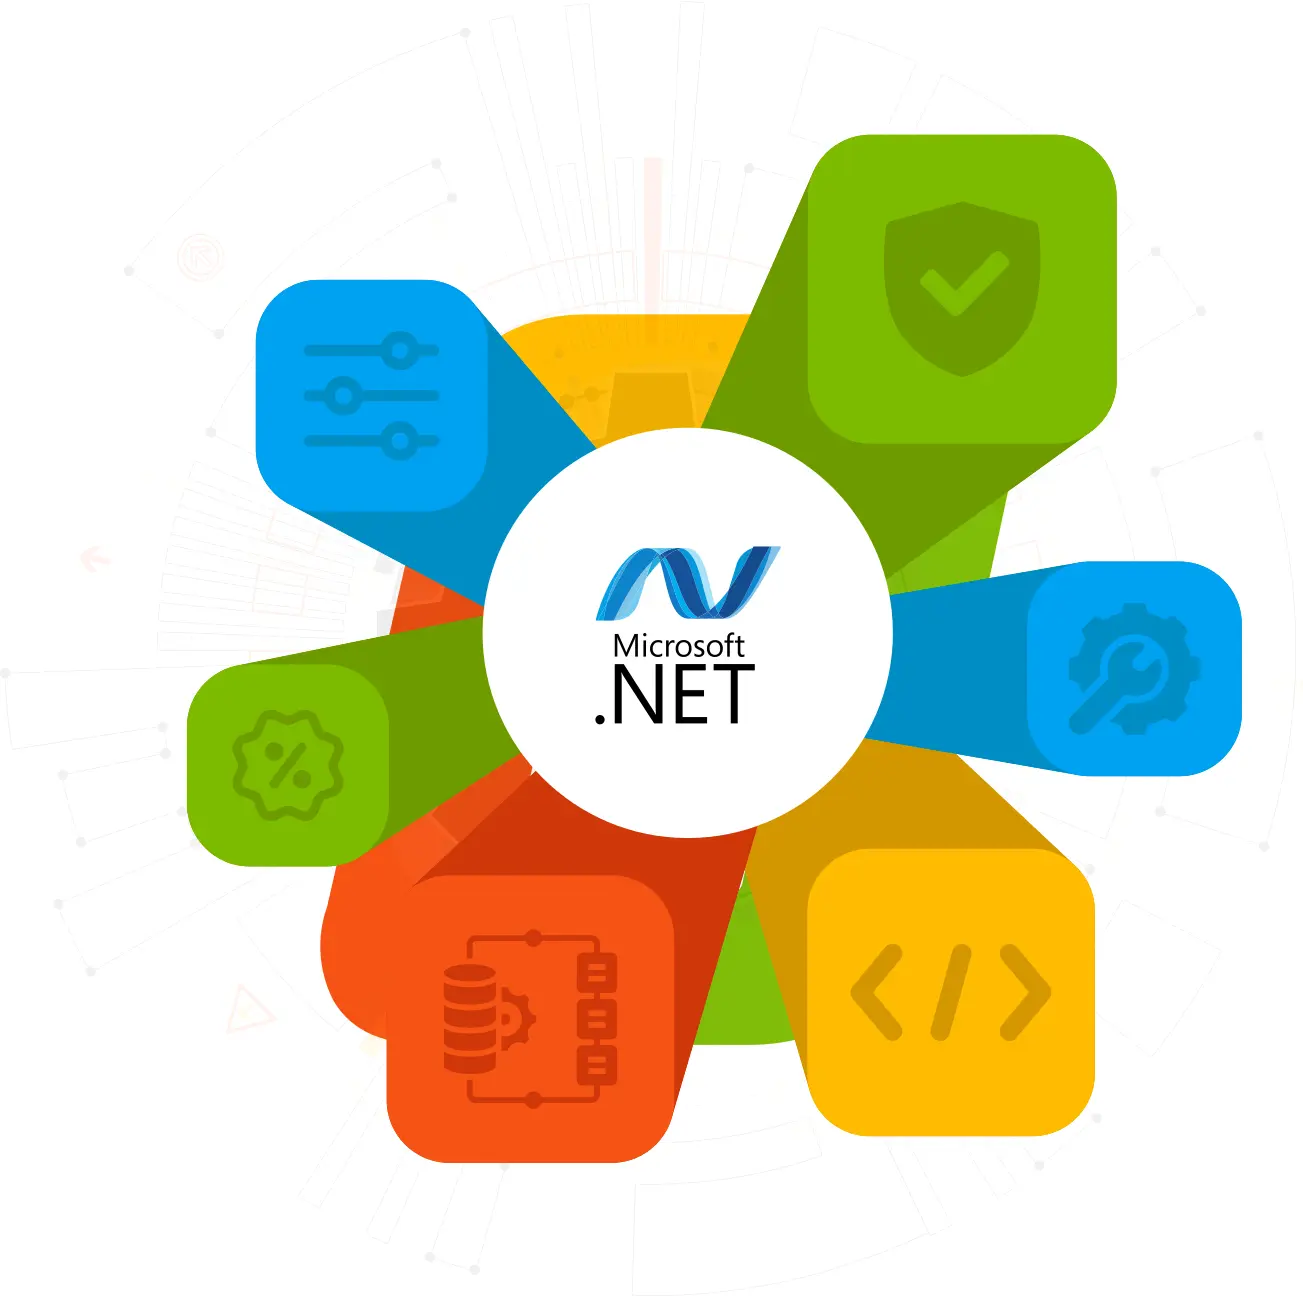 Asp.Net Development Services